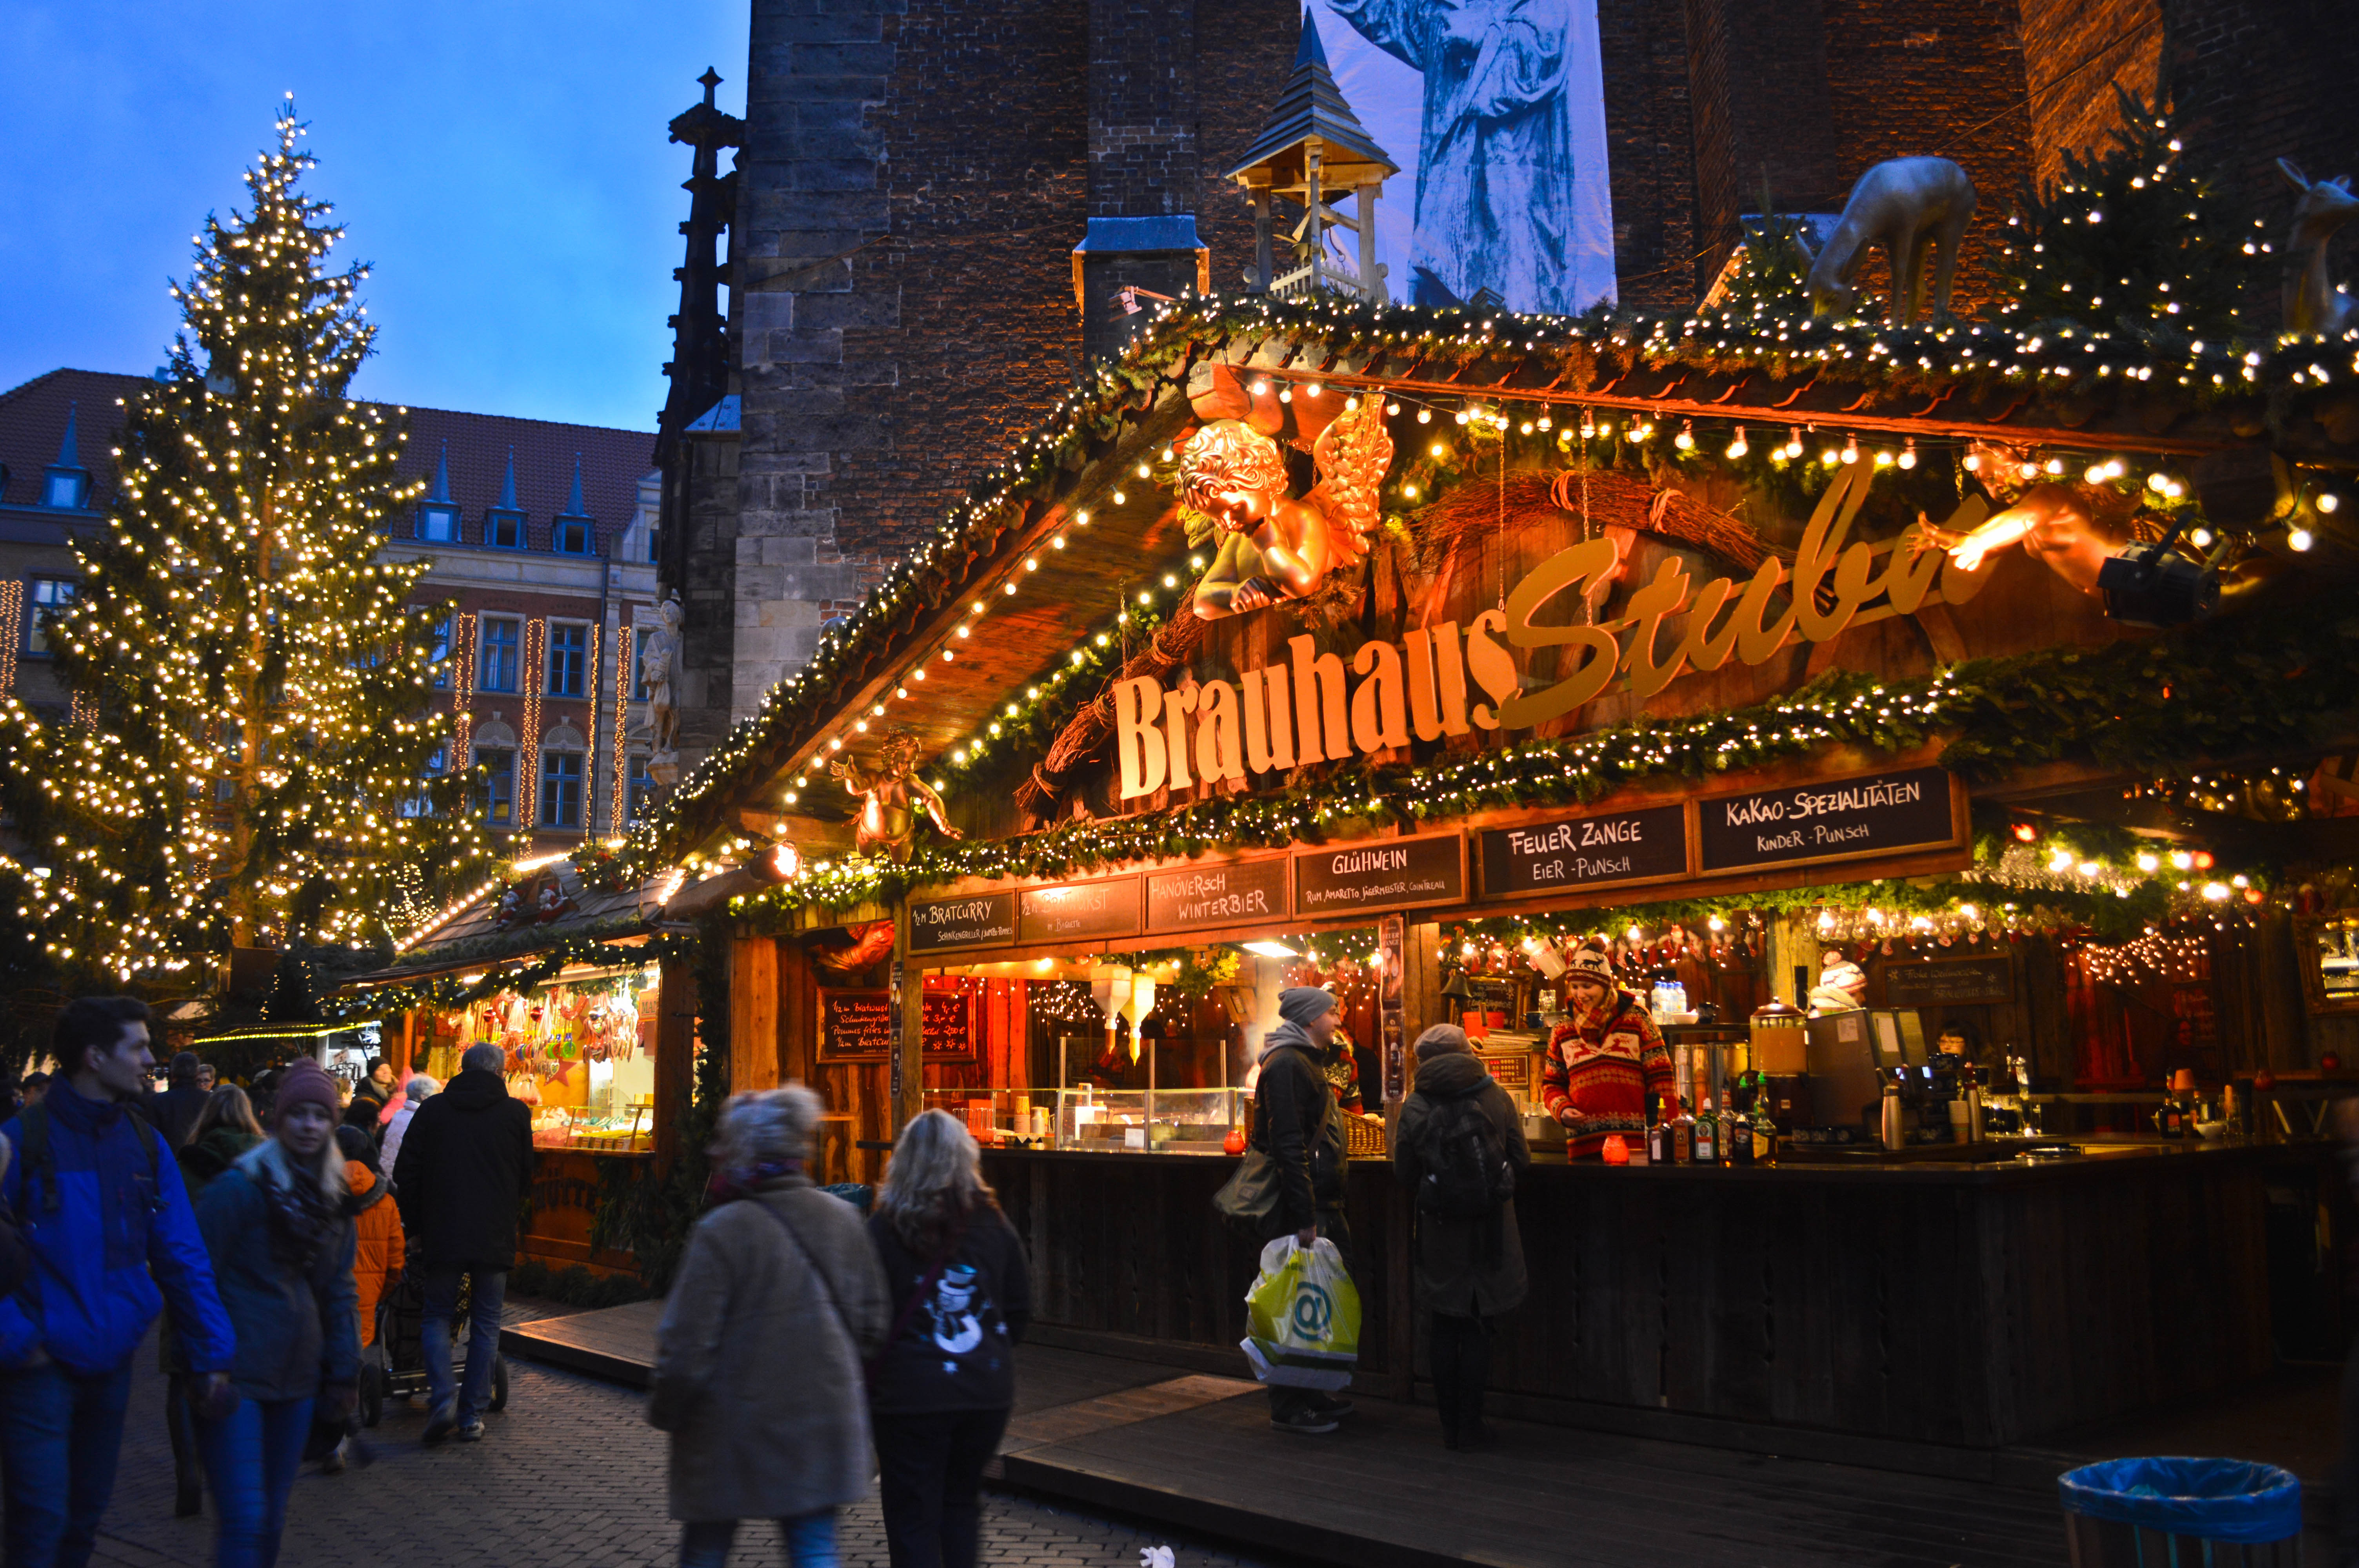 ChristmasMarketCrawl Day 1: Hannover Christmas Market